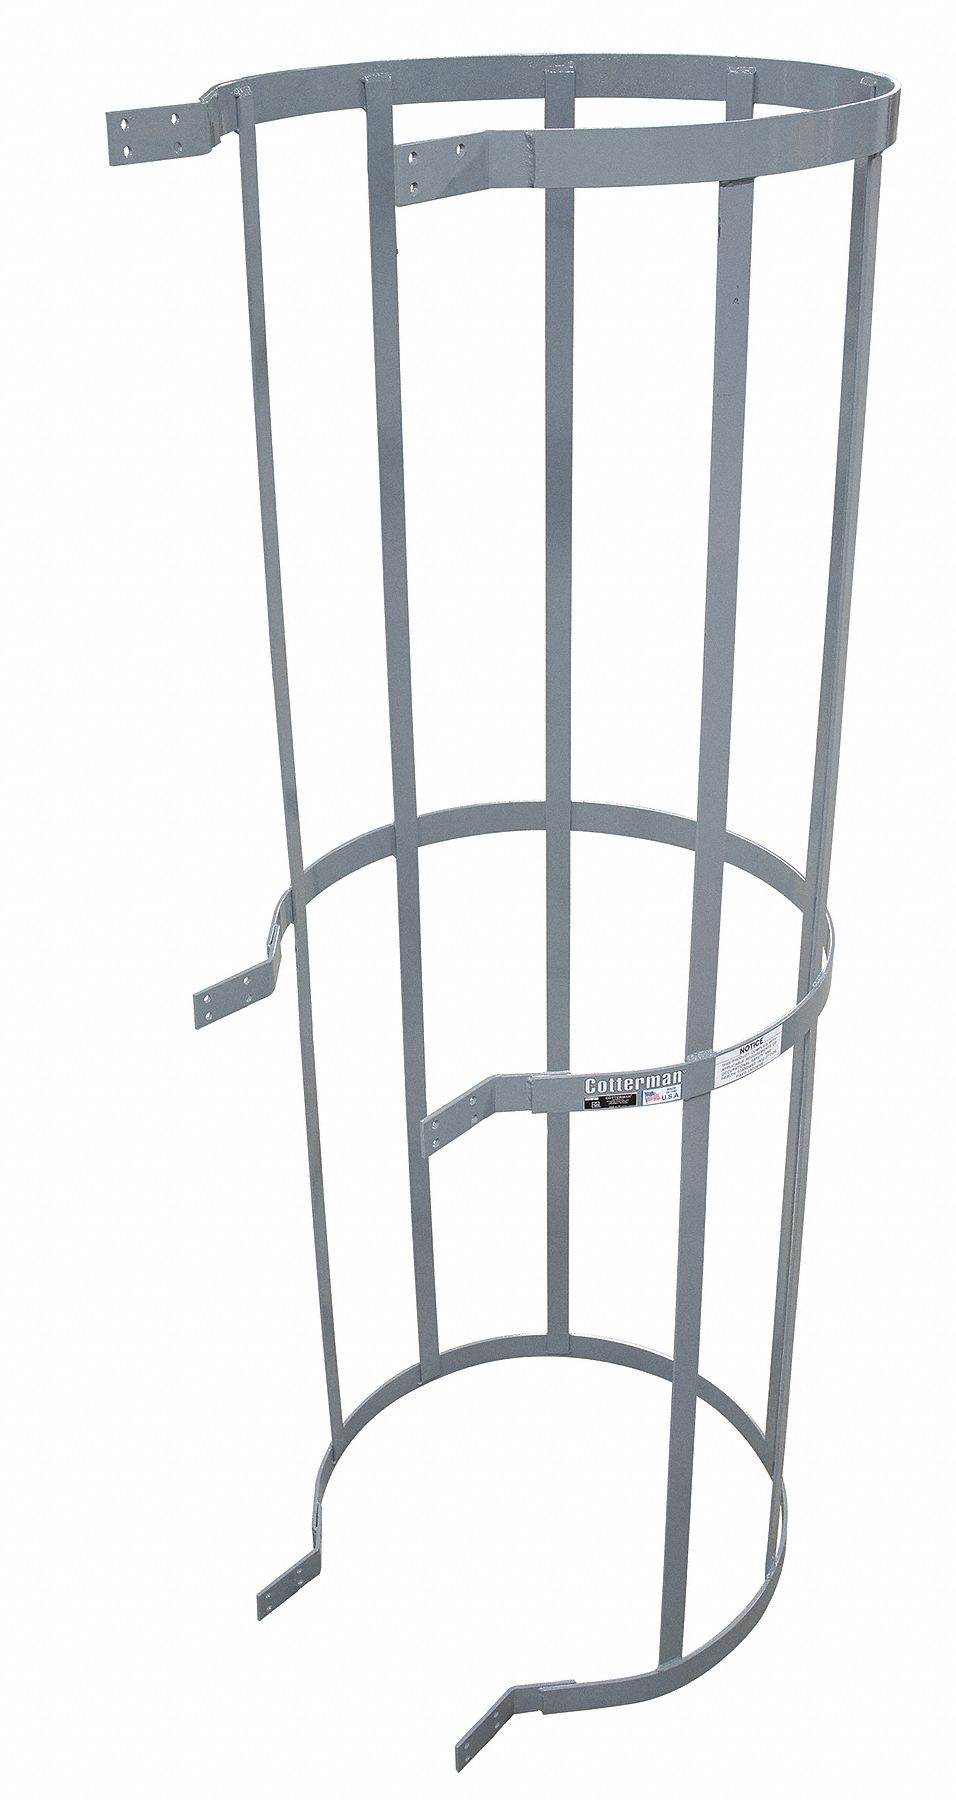 4EU28 - Safety Cage Gray Powder Coat Steel